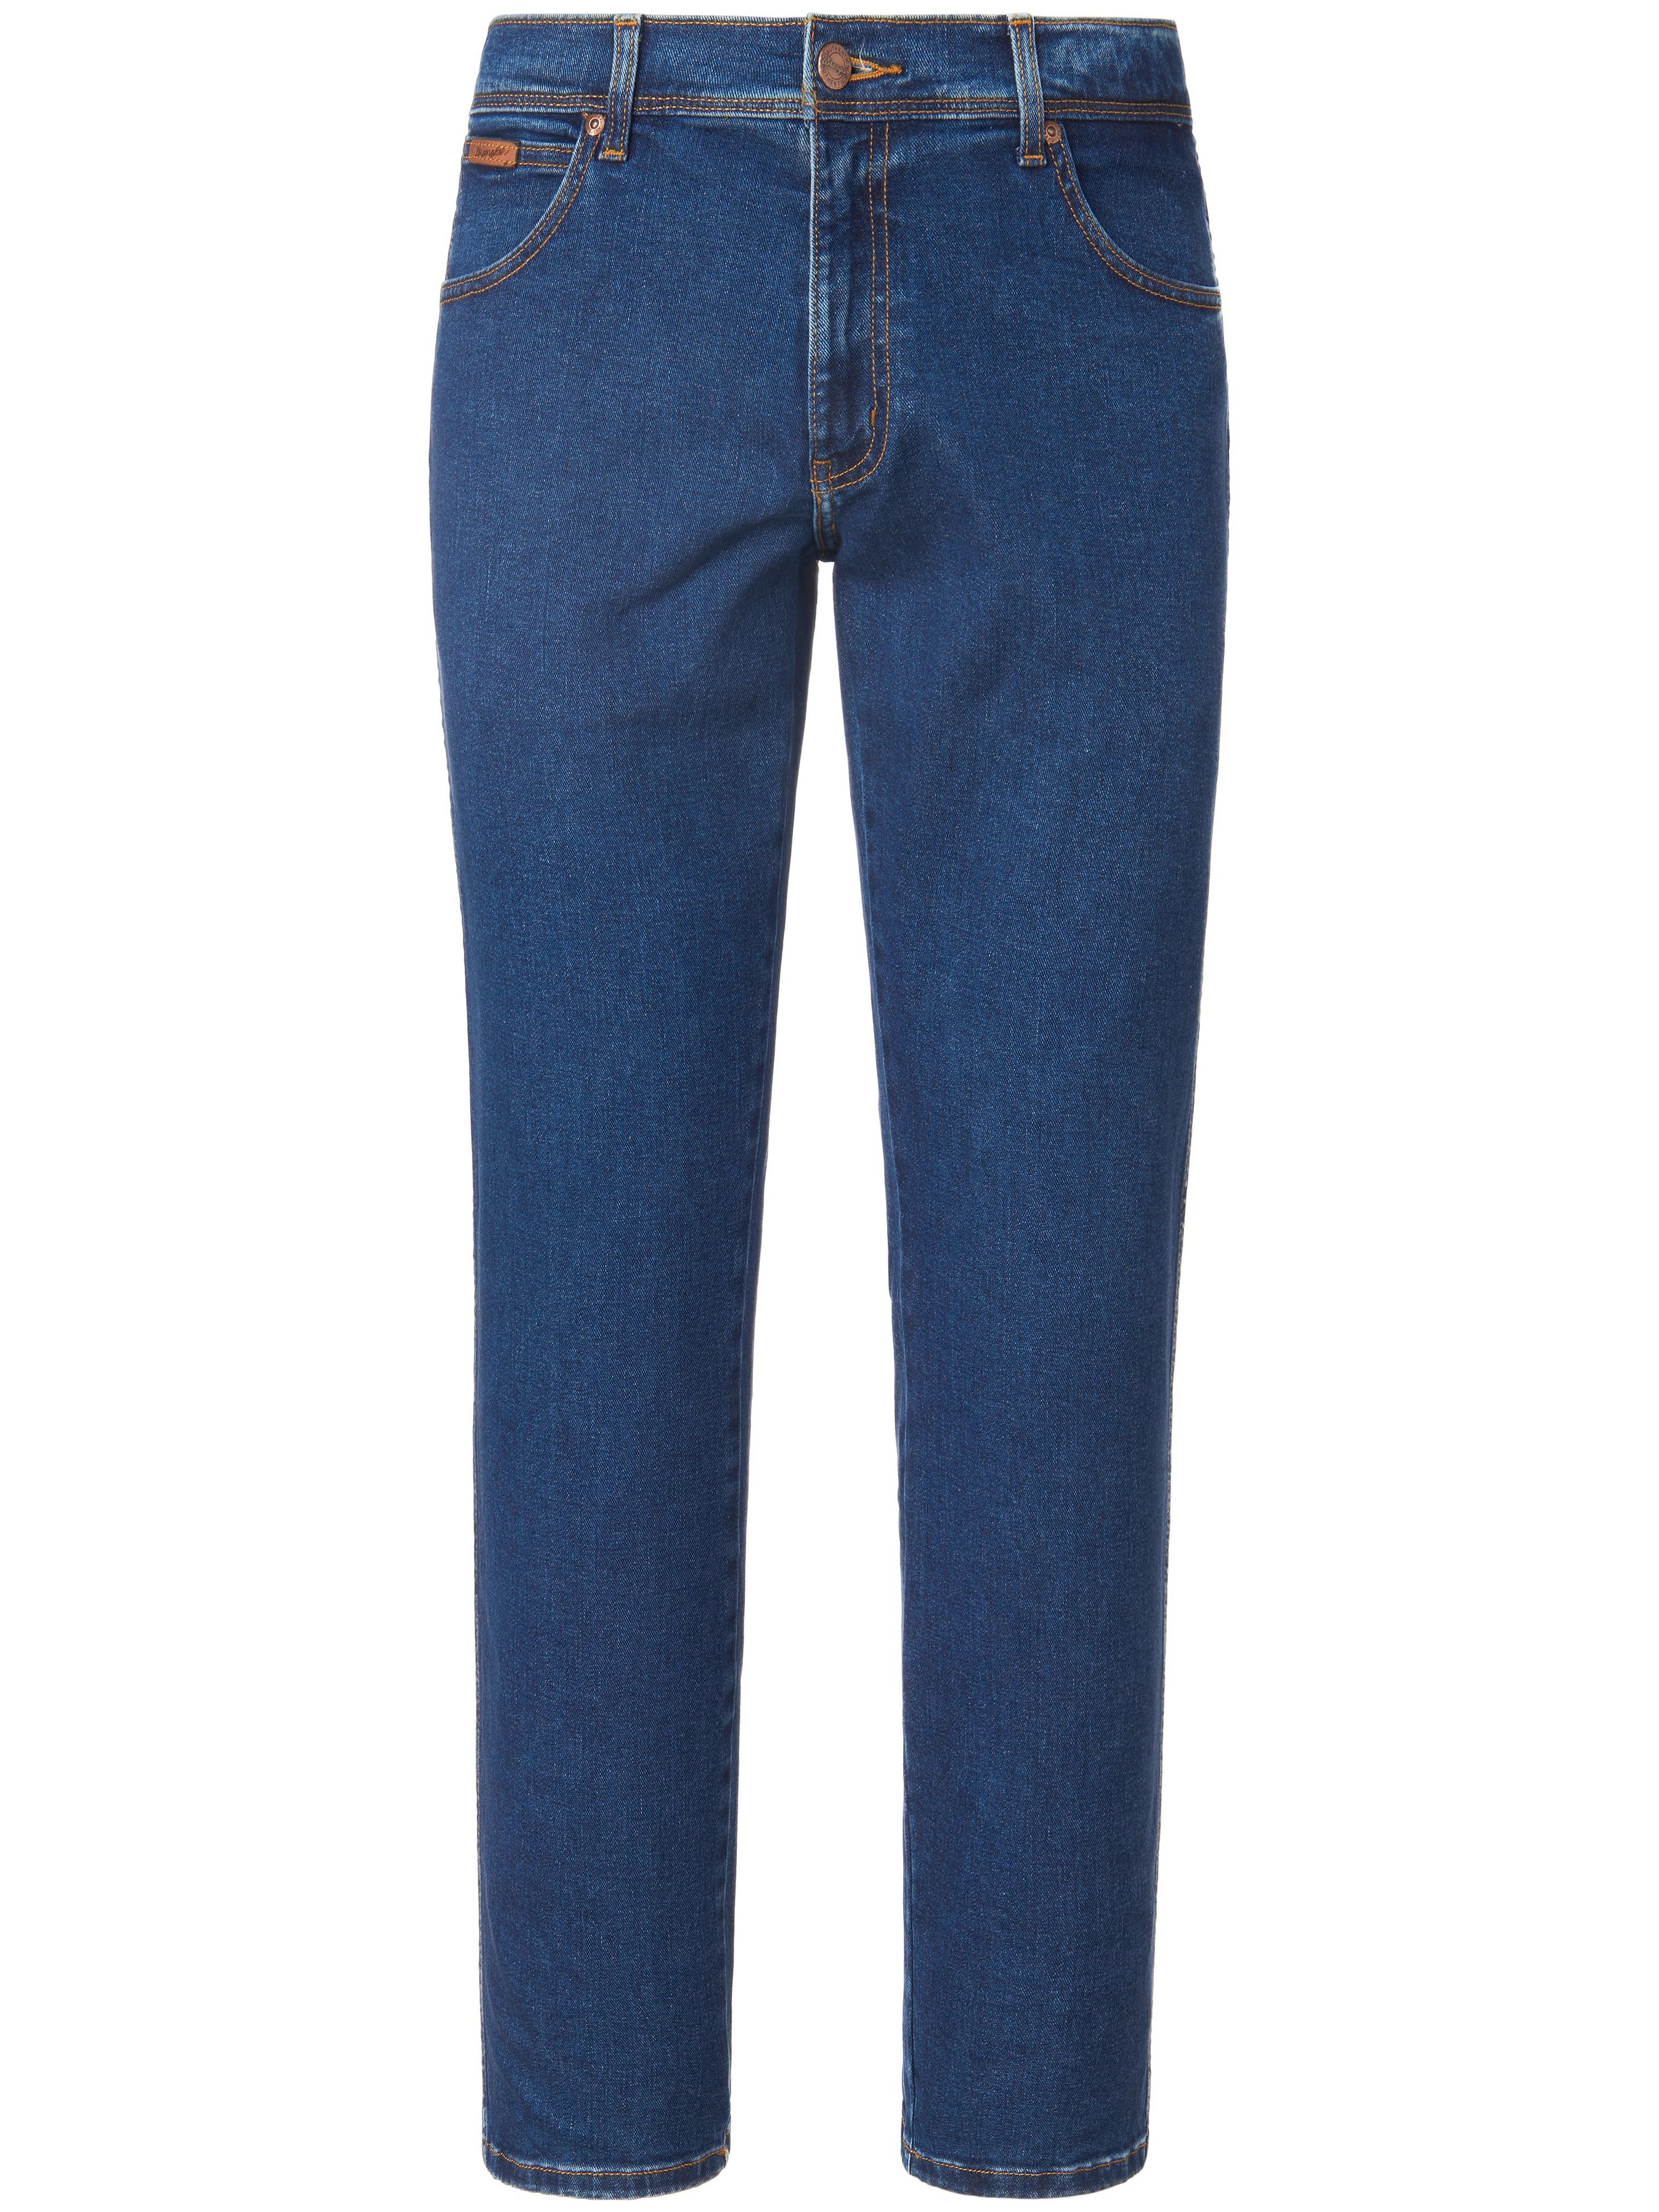 Jeans Wrangler blau Größe: 33